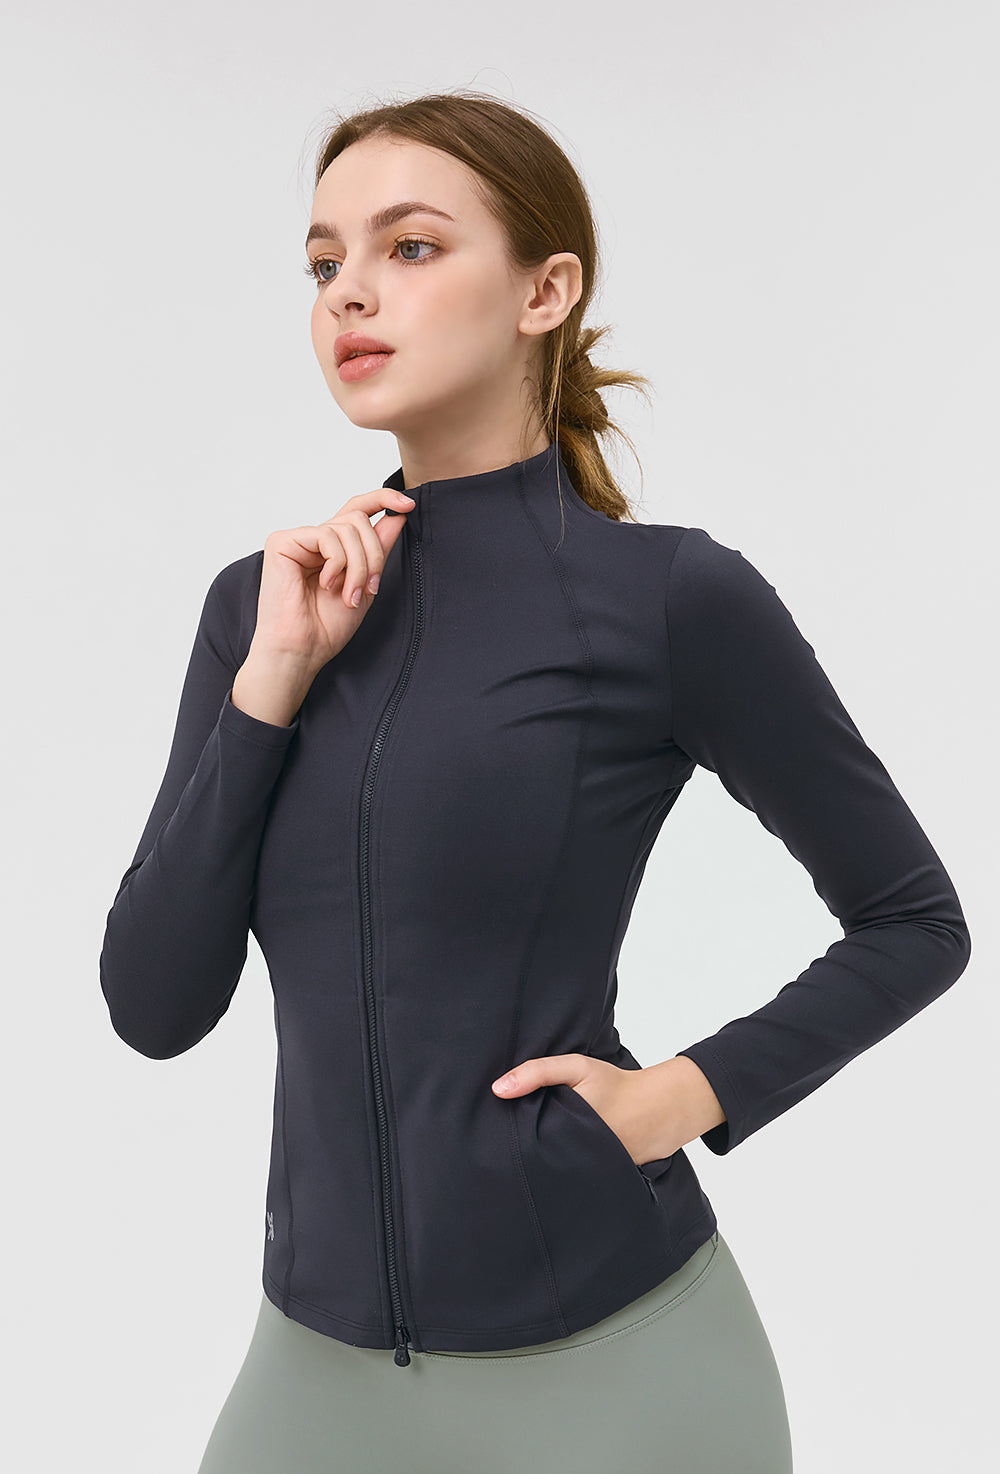 XELLA Intention Slim Fit Zip-up Jacket - Shimmer Navy